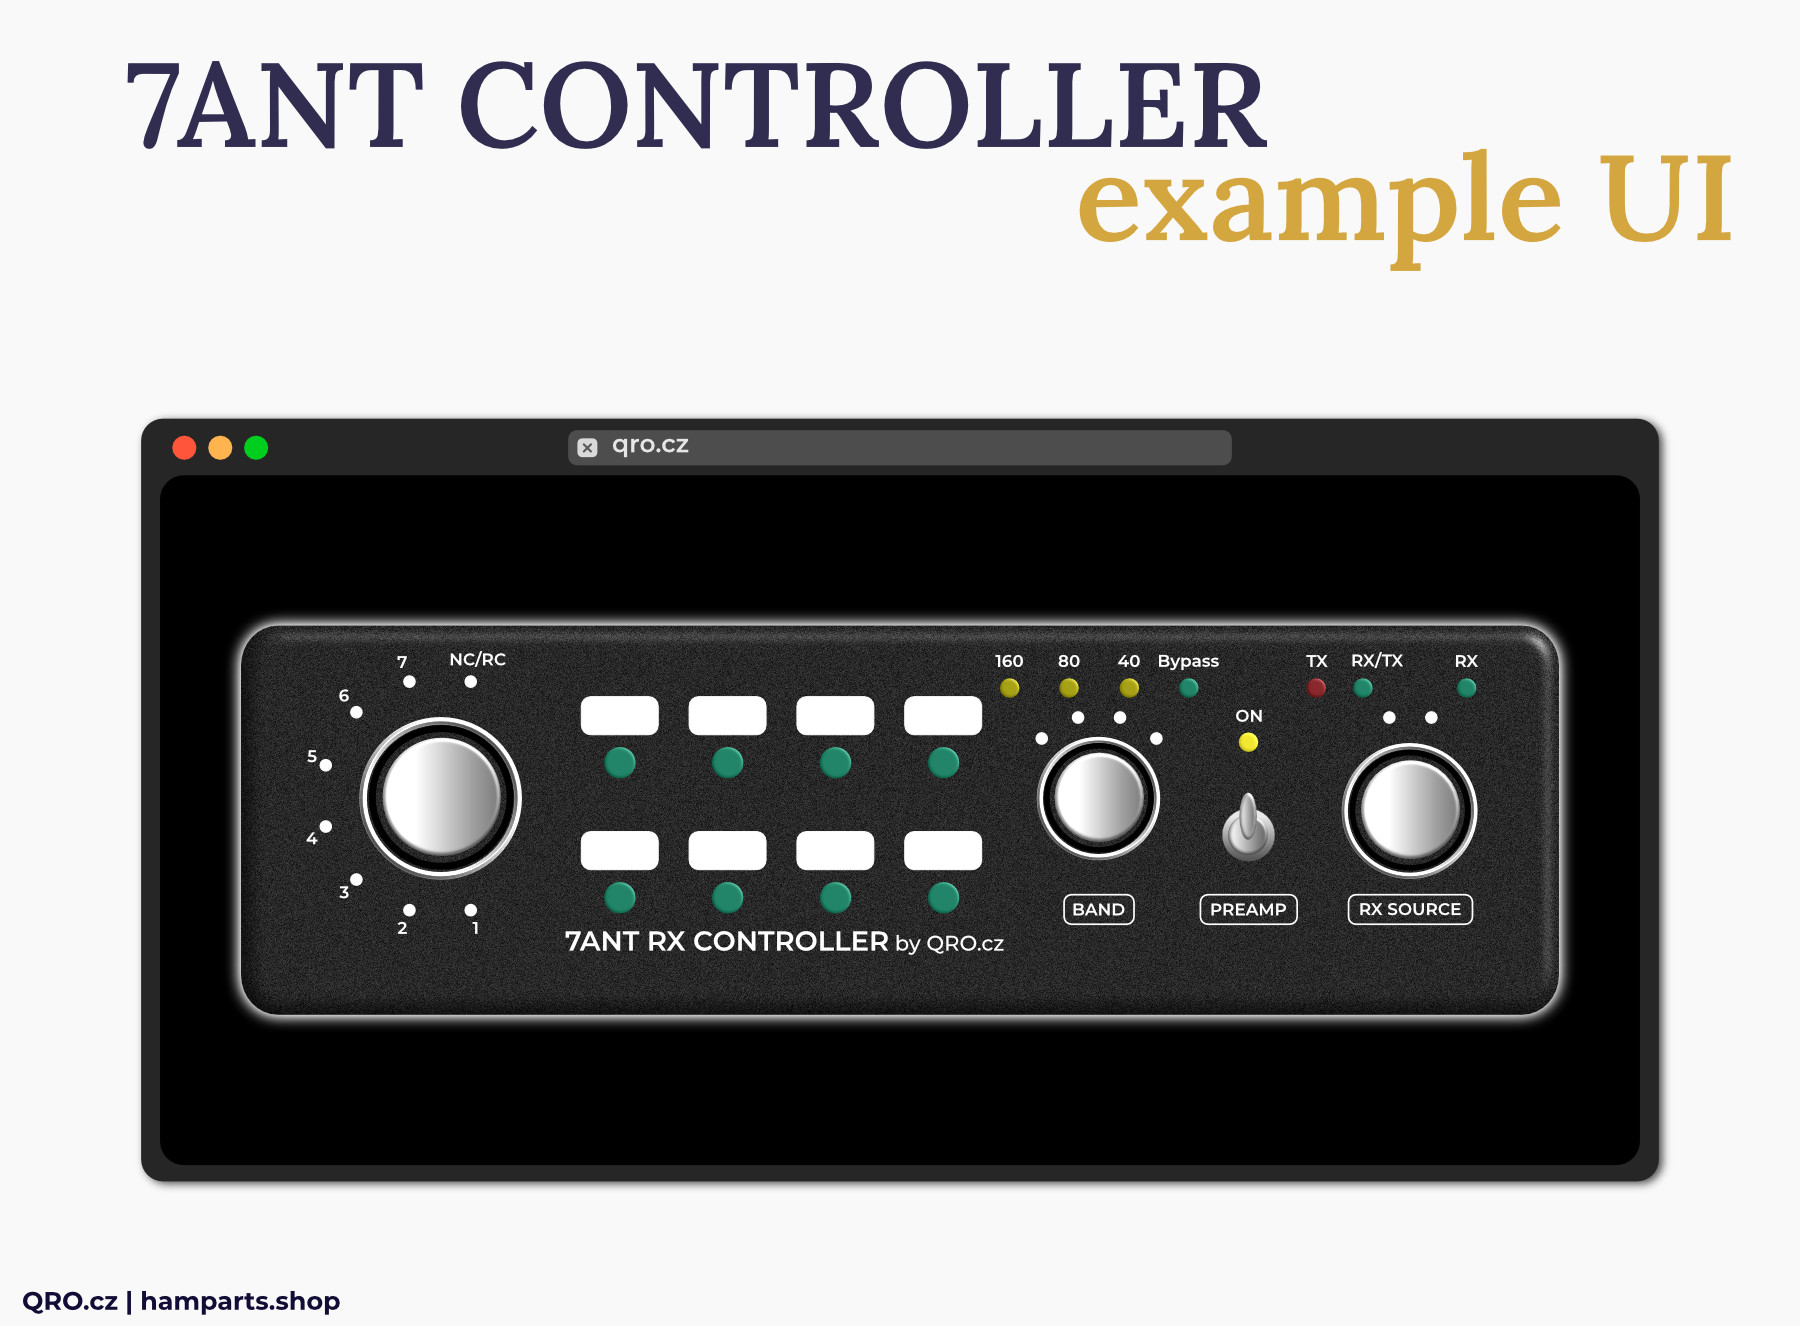 7ANT remote controller remote control options qro.cz hamparts.shop